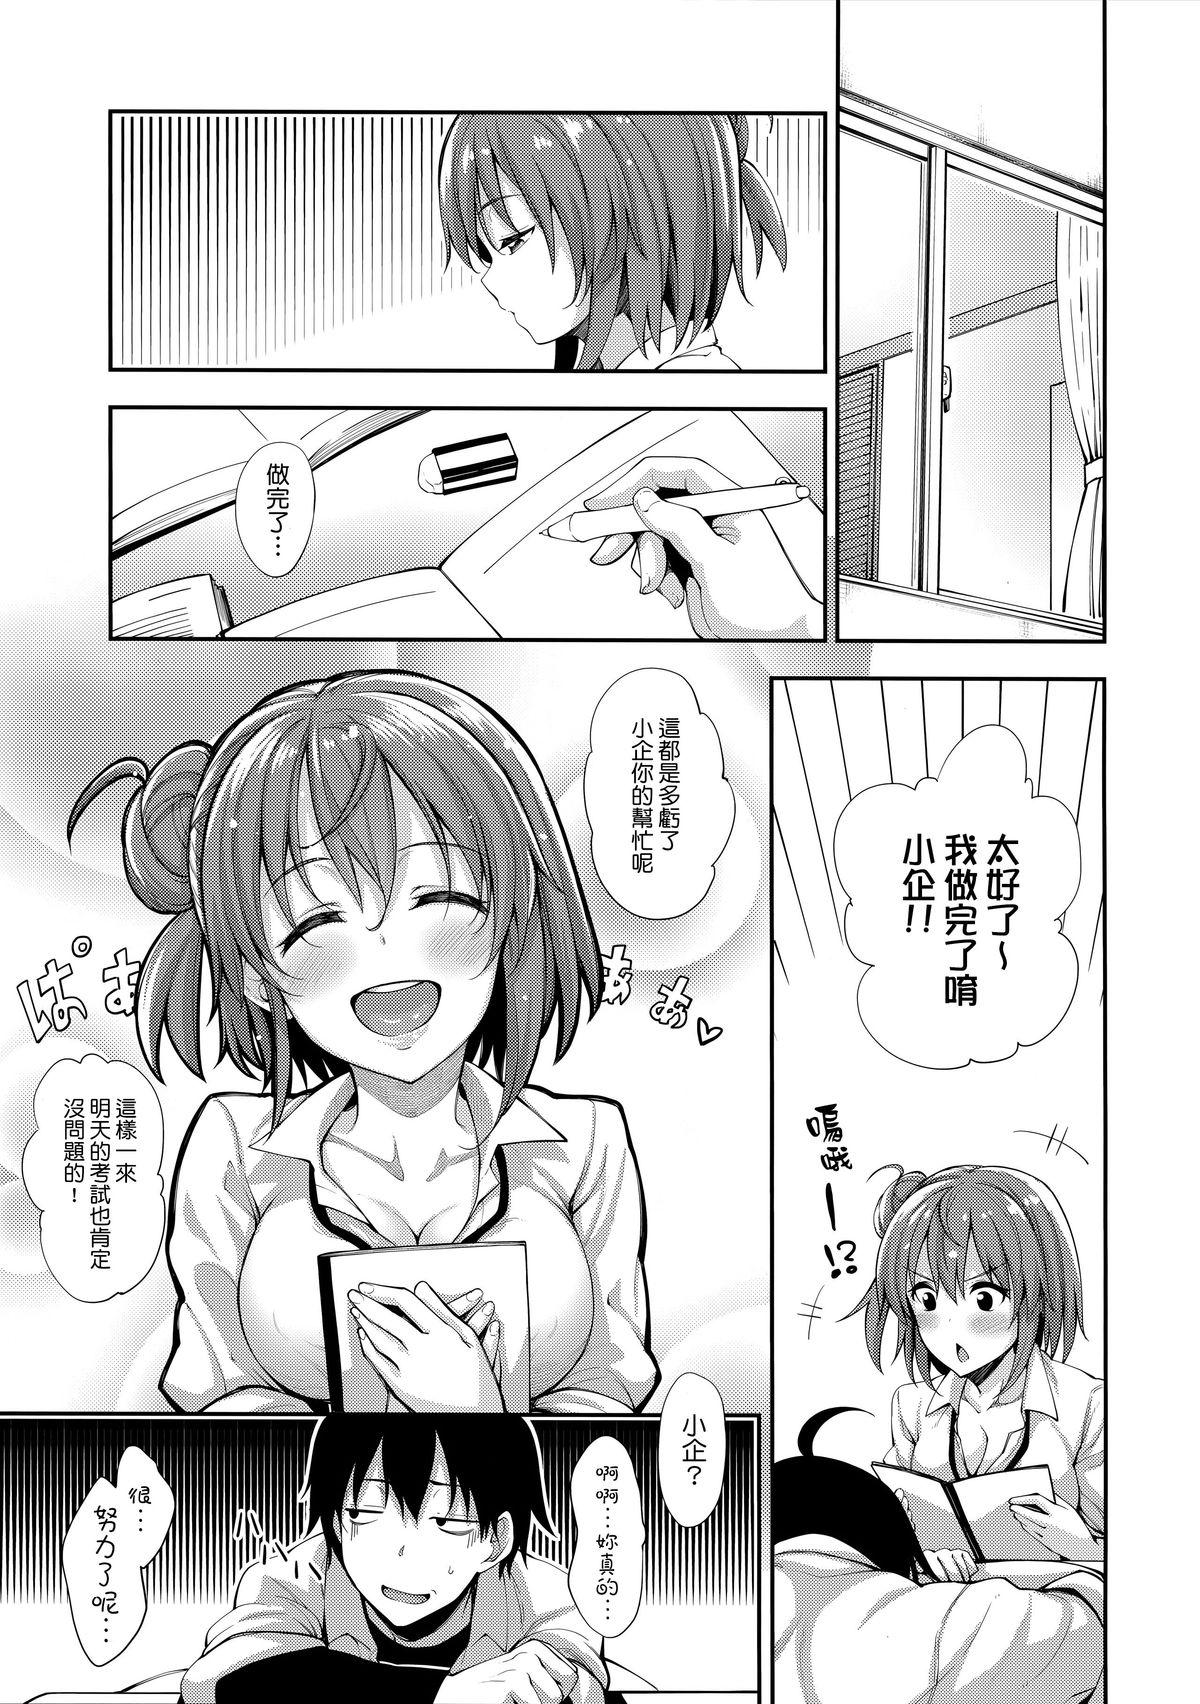 Chica LOVE STORY #03 - Yahari ore no seishun love come wa machigatteiru Perfect Tits - Page 5